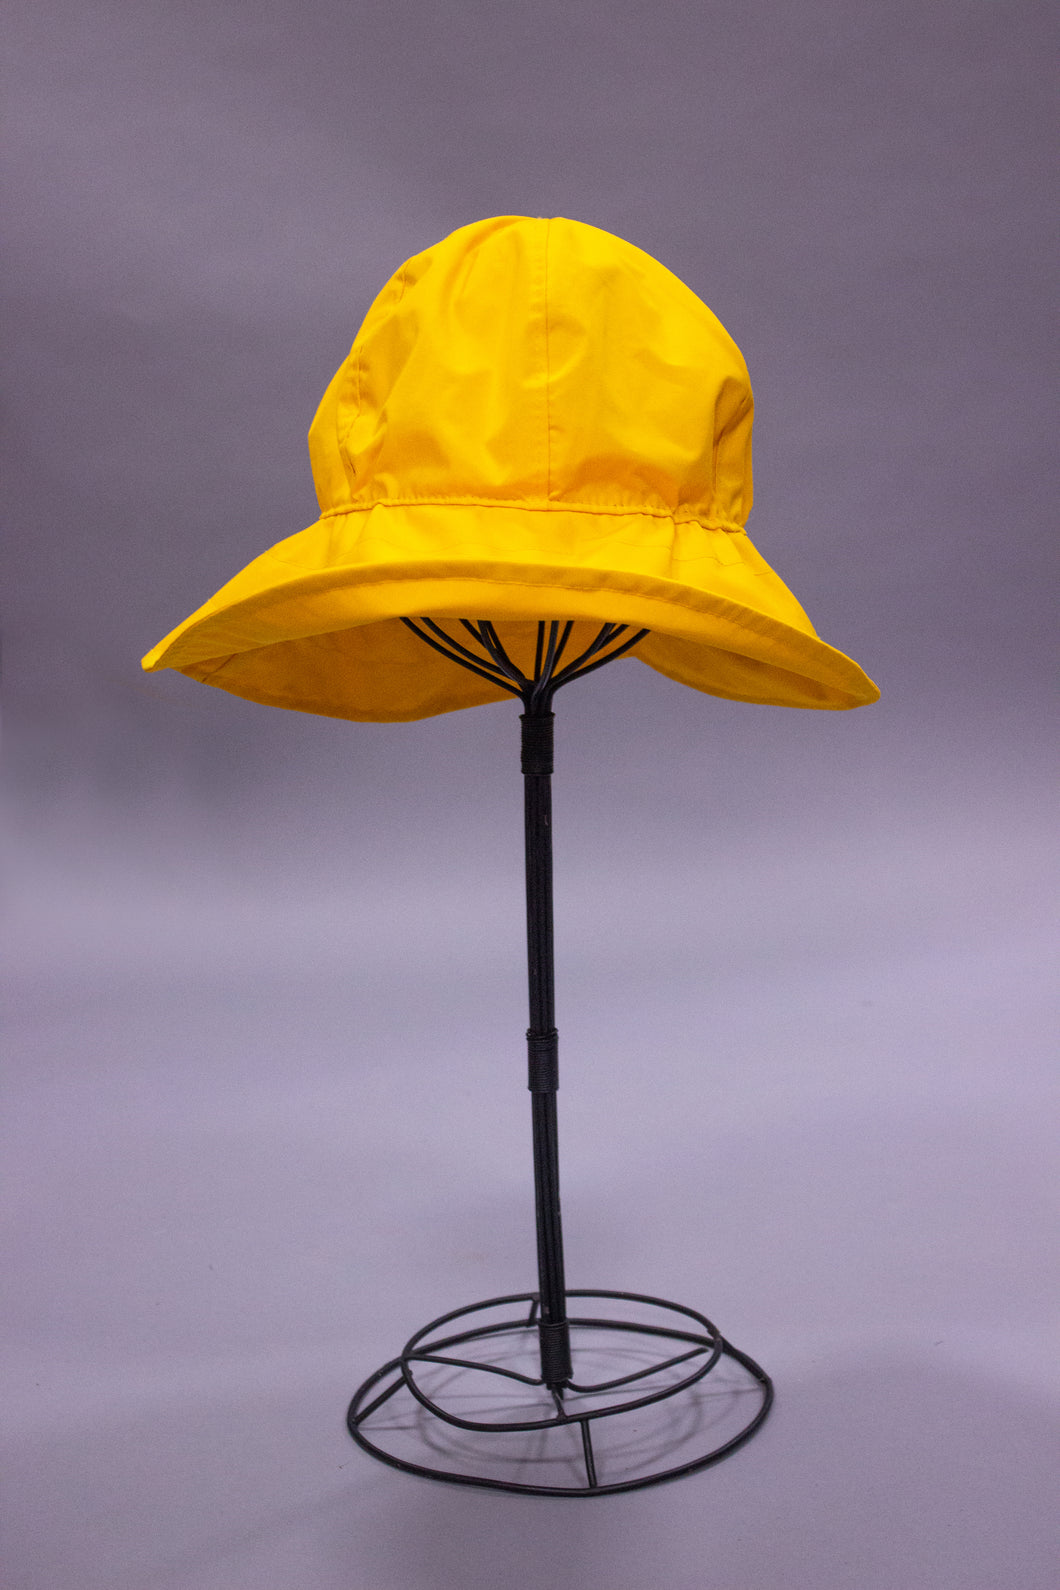 *Yellow Lined Rain Hat $50 (RH 1016A)